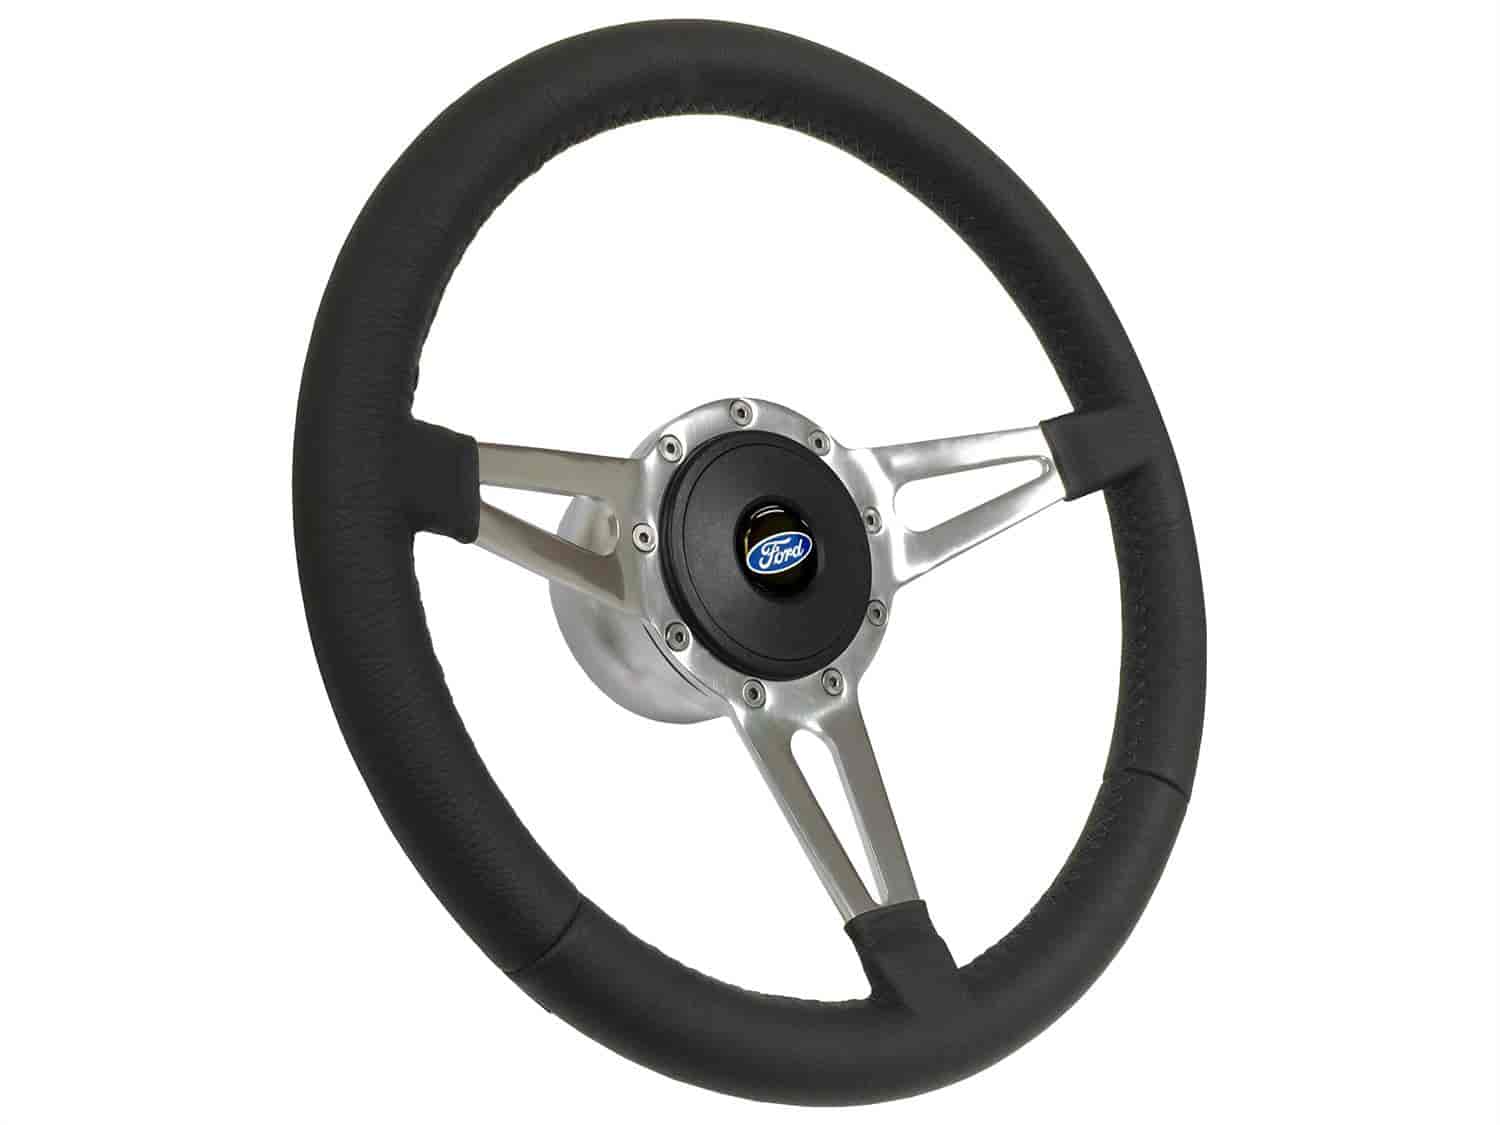 S9 Sport Steering Wheel Kit 1964-1972 Ford/Mercury, 14 in. Diameter, Premium Black Leather Grip, w/ 9-Bolt Adapter & Horn Button